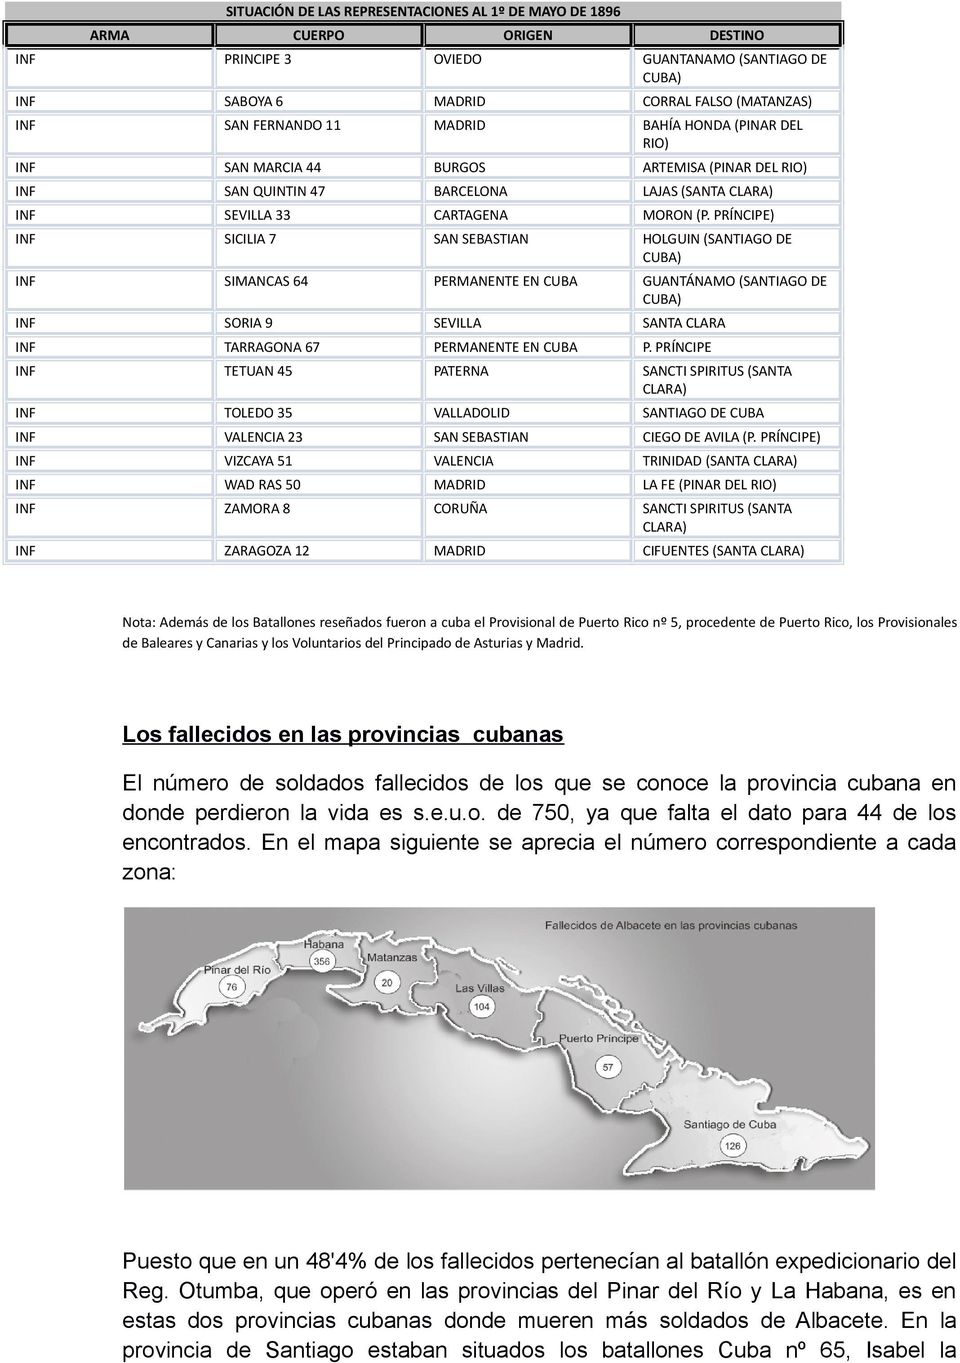 PRÍNCIPE) INF SICILIA 7 SAN SEBASTIAN HOLGUIN (SANTIAGO DE CUBA) INF SIMANCAS 64 PERMANENTE EN CUBA GUANTÁNAMO (SANTIAGO DE CUBA) INF SORIA 9 SEVILLA SANTA CLARA INF TARRAGONA 67 PERMANENTE EN CUBA P.